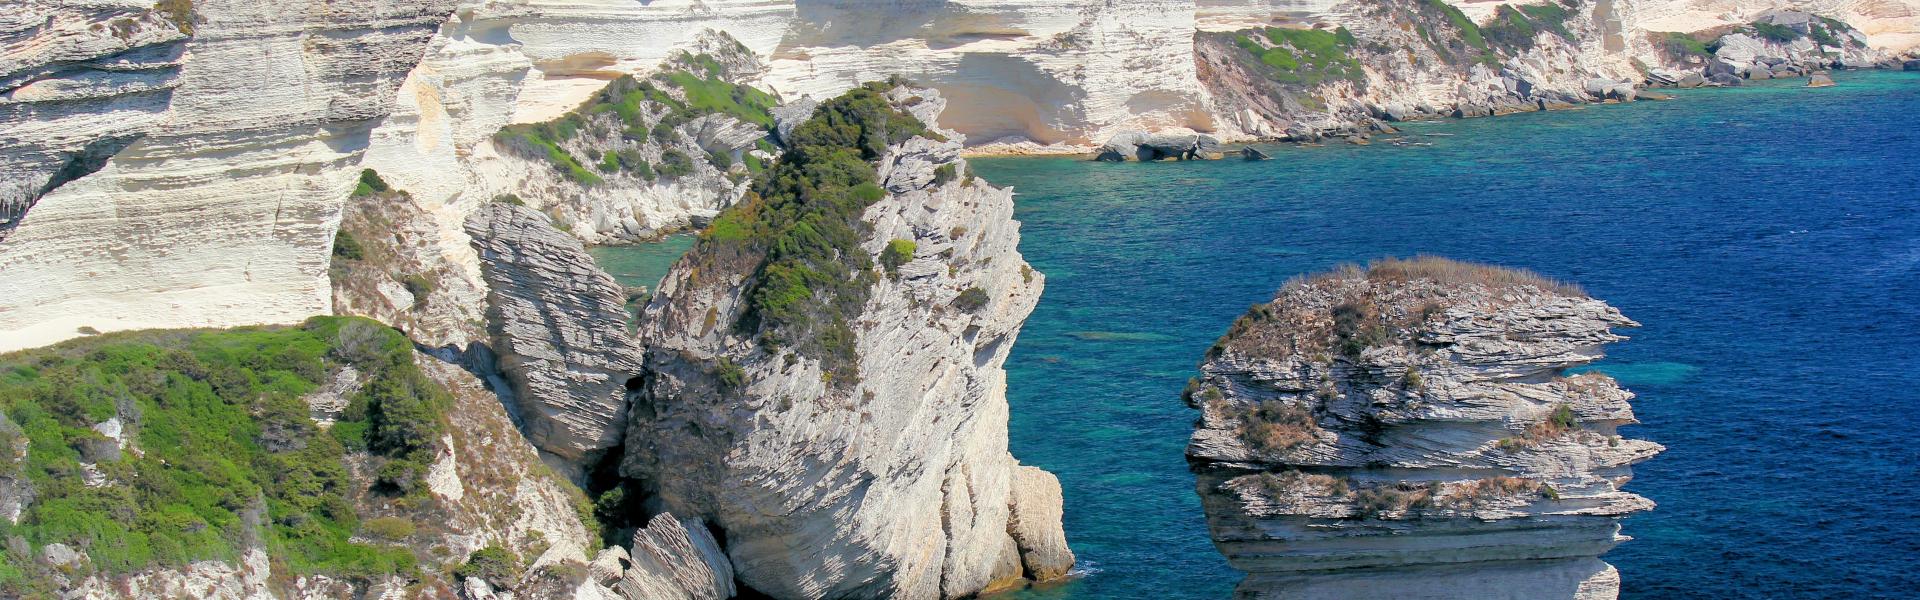 Location de vacances à Sollacaro - Corse-du-Sud - amivac